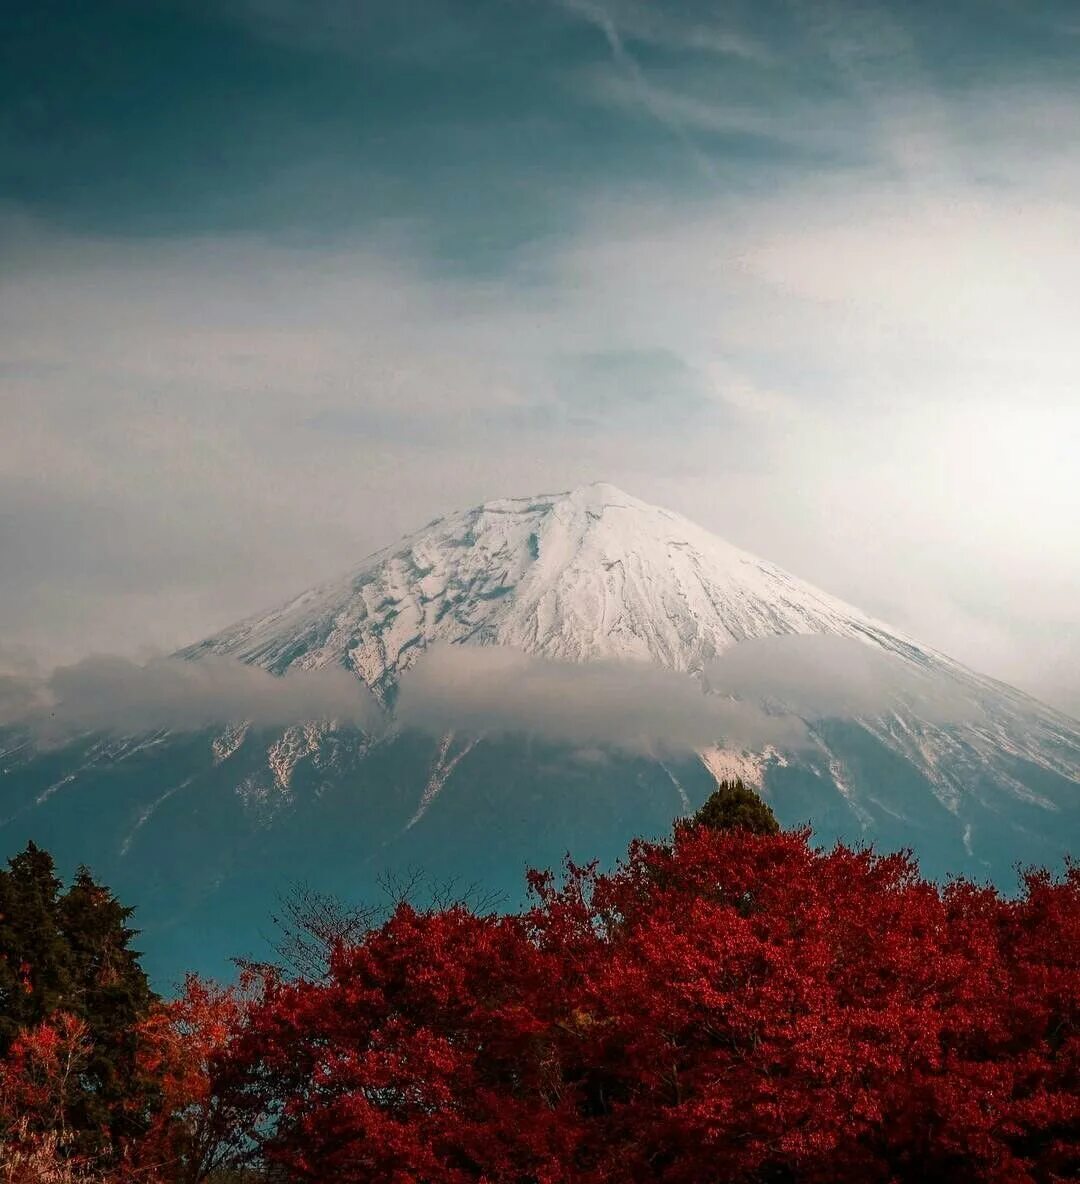 Фудзияма цены. Гора-вулкан Фудзияма. Токио вулкан Фудзияма. Гора Фудзияма (Фудзи). Фудзи-Сан - Священная гора японцев.